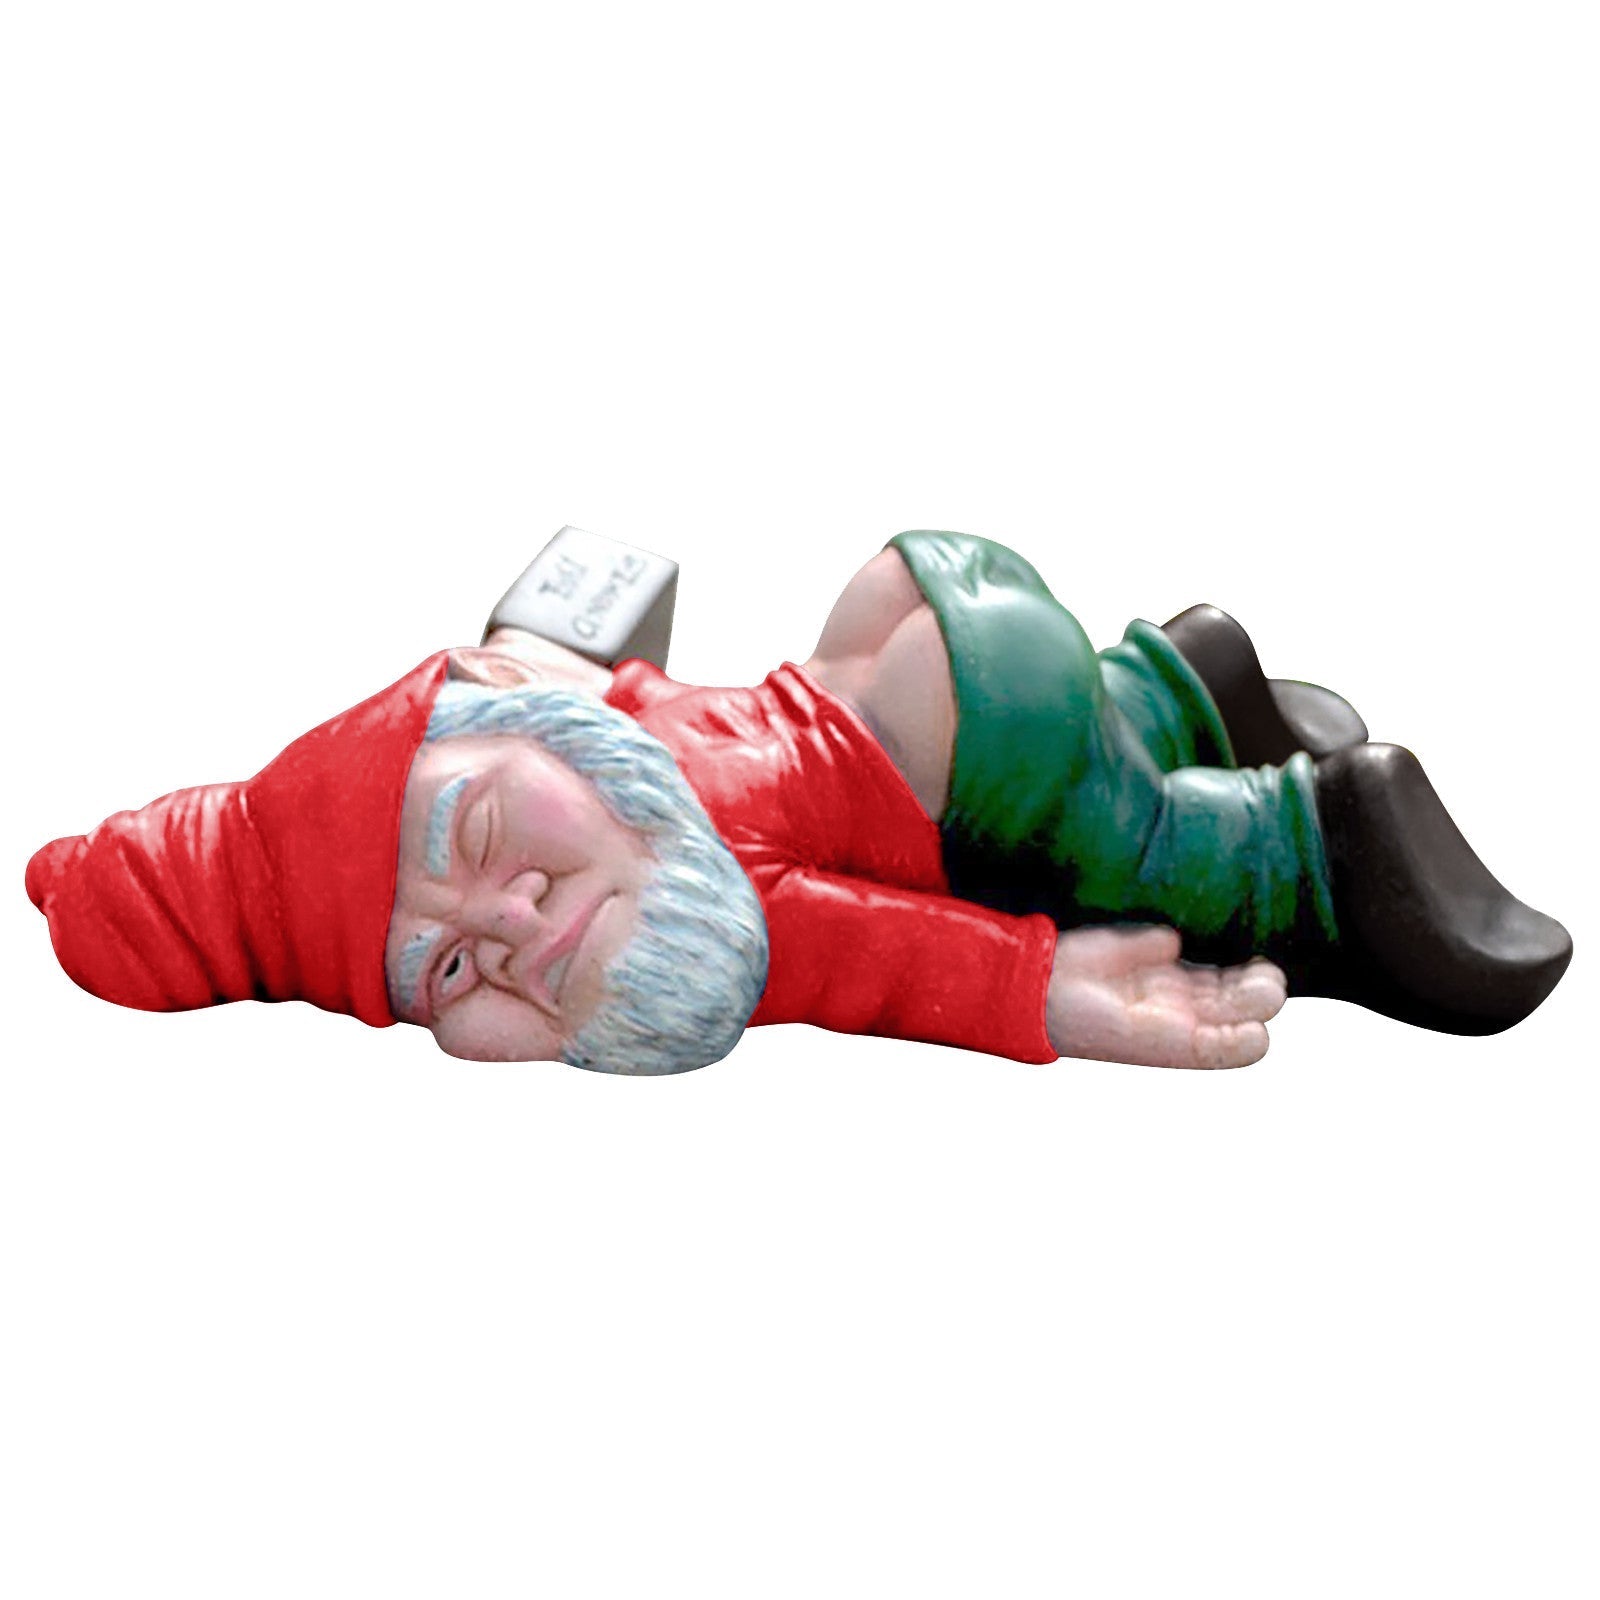 Funny Drunk Dwarf Figurine Outdoor Garden Decoration Resin Statue Crafts Ornaments